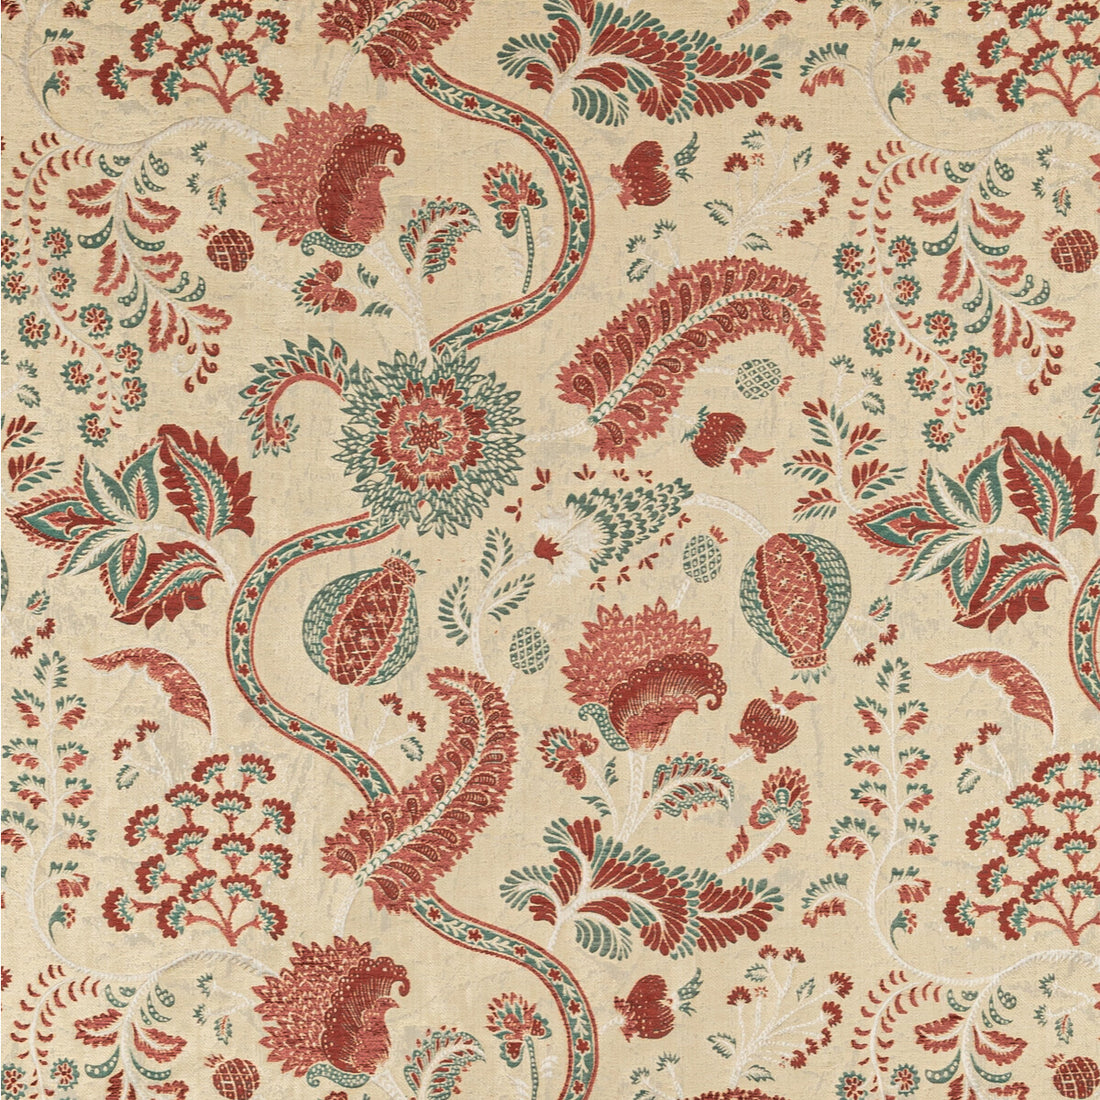 Jardin Bleu fabric in sand/rose color - pattern 2020213.194.0 - by Lee Jofa in the Oscar De La Renta IV collection